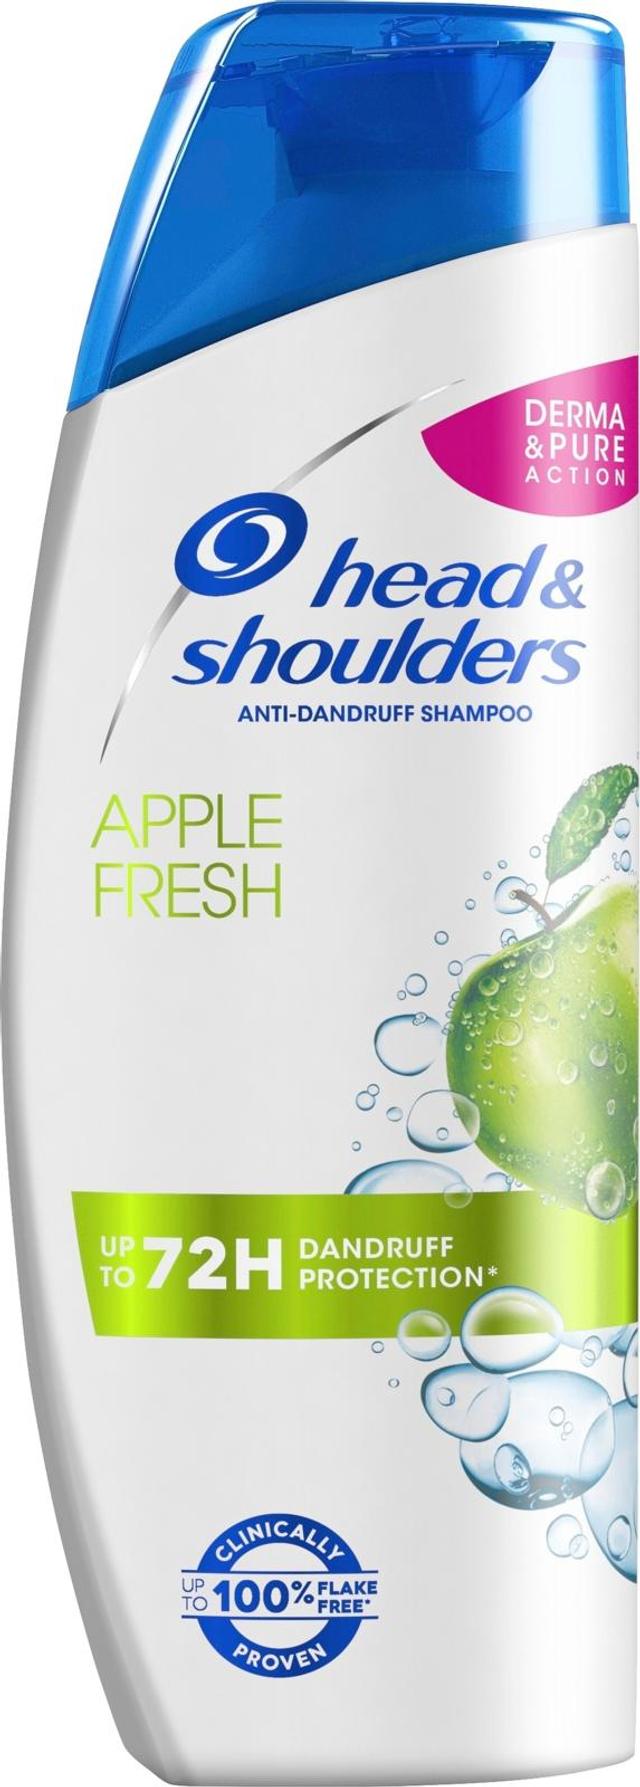 head&shoulders 250ml Apple Fresh shampoo